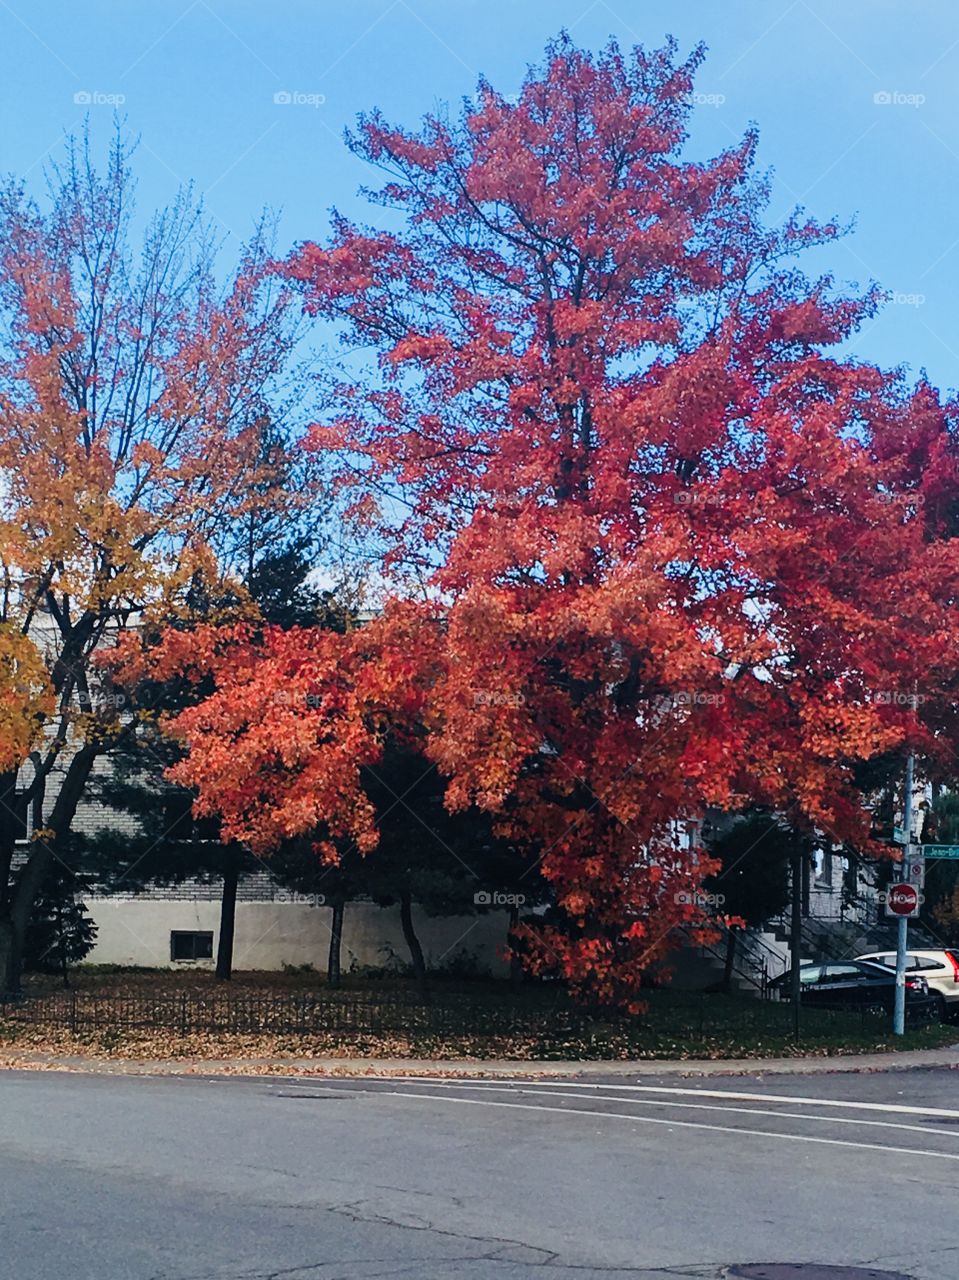 Autumn Tree 01-Octobre 22 2018- Montreal, Quebec, Canada